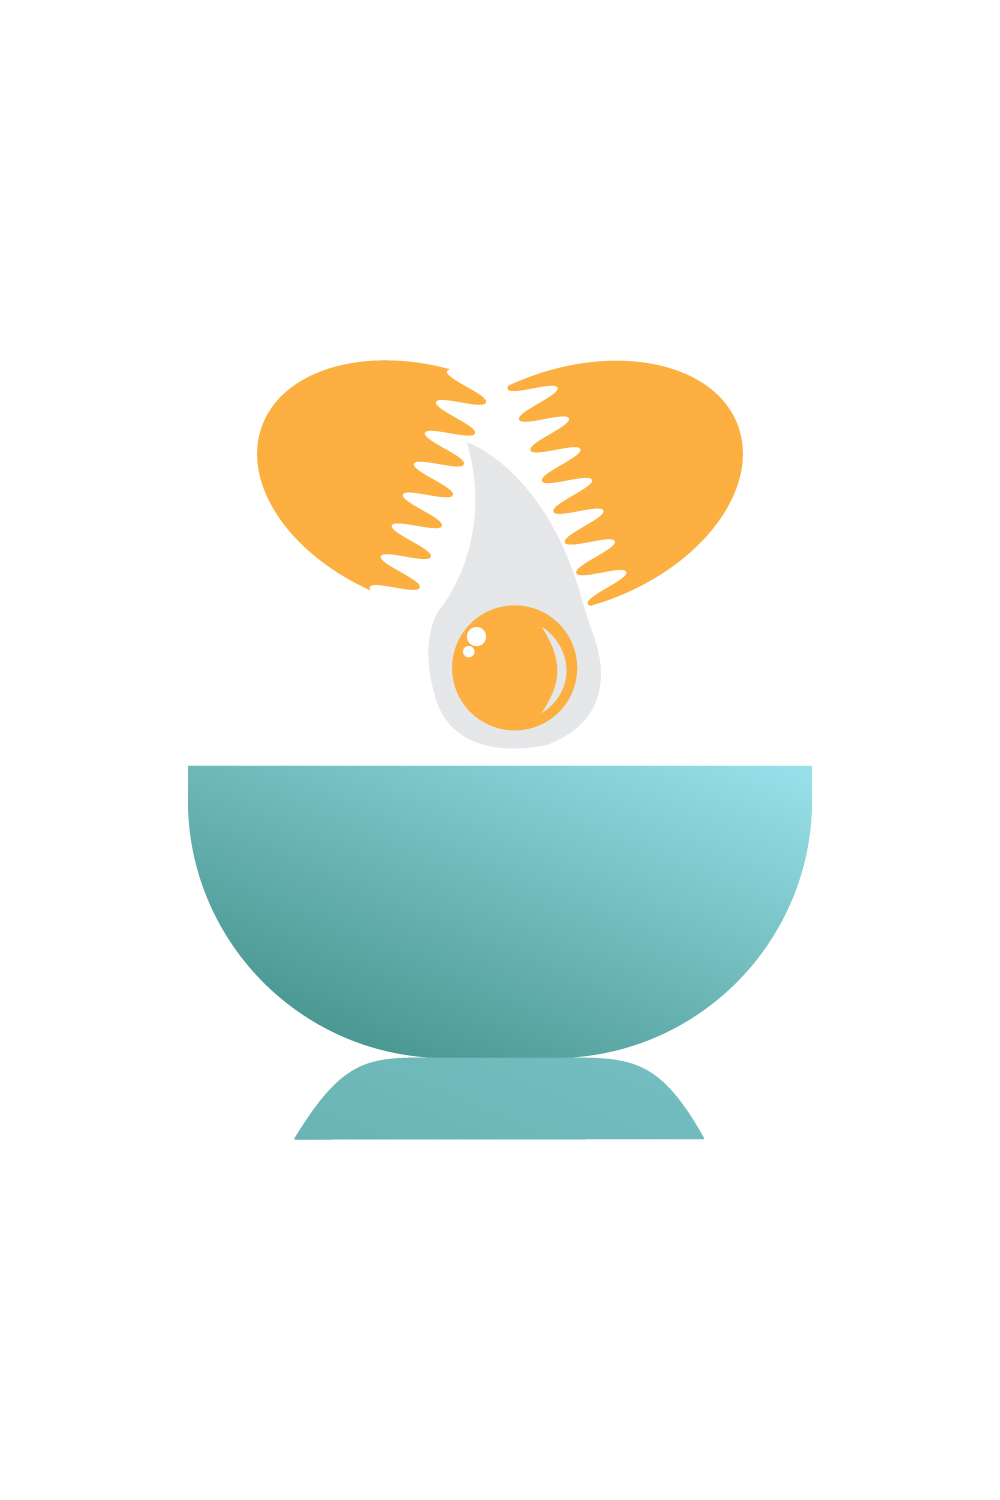 Egg Bowl Crackeg Free logo design Boiled Egg icons For free download pinterest preview image.